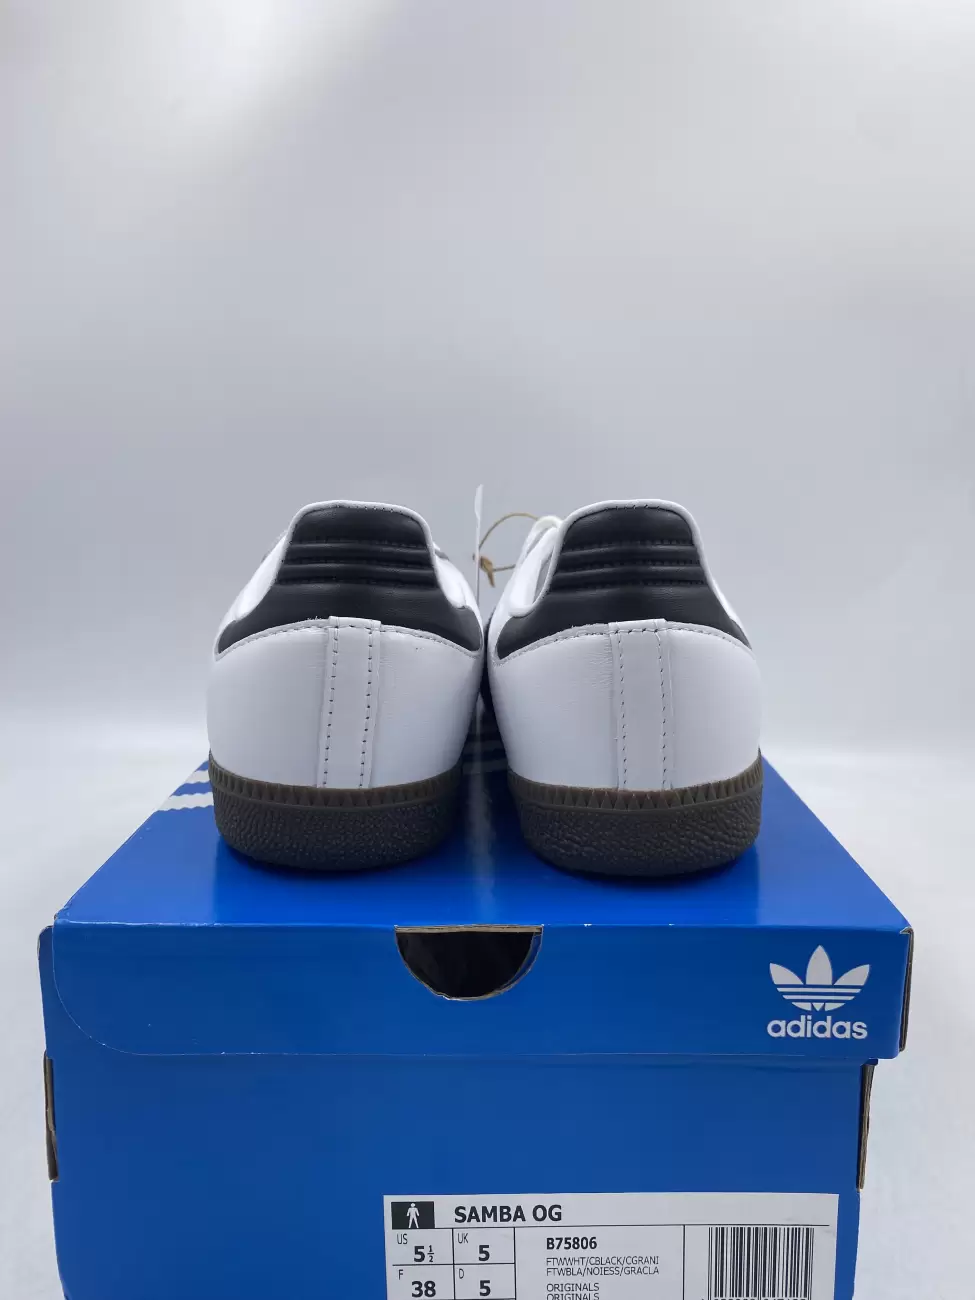 40349 - Adidas Samba OG Cloud White Core Black | Item Details - AfterMarket